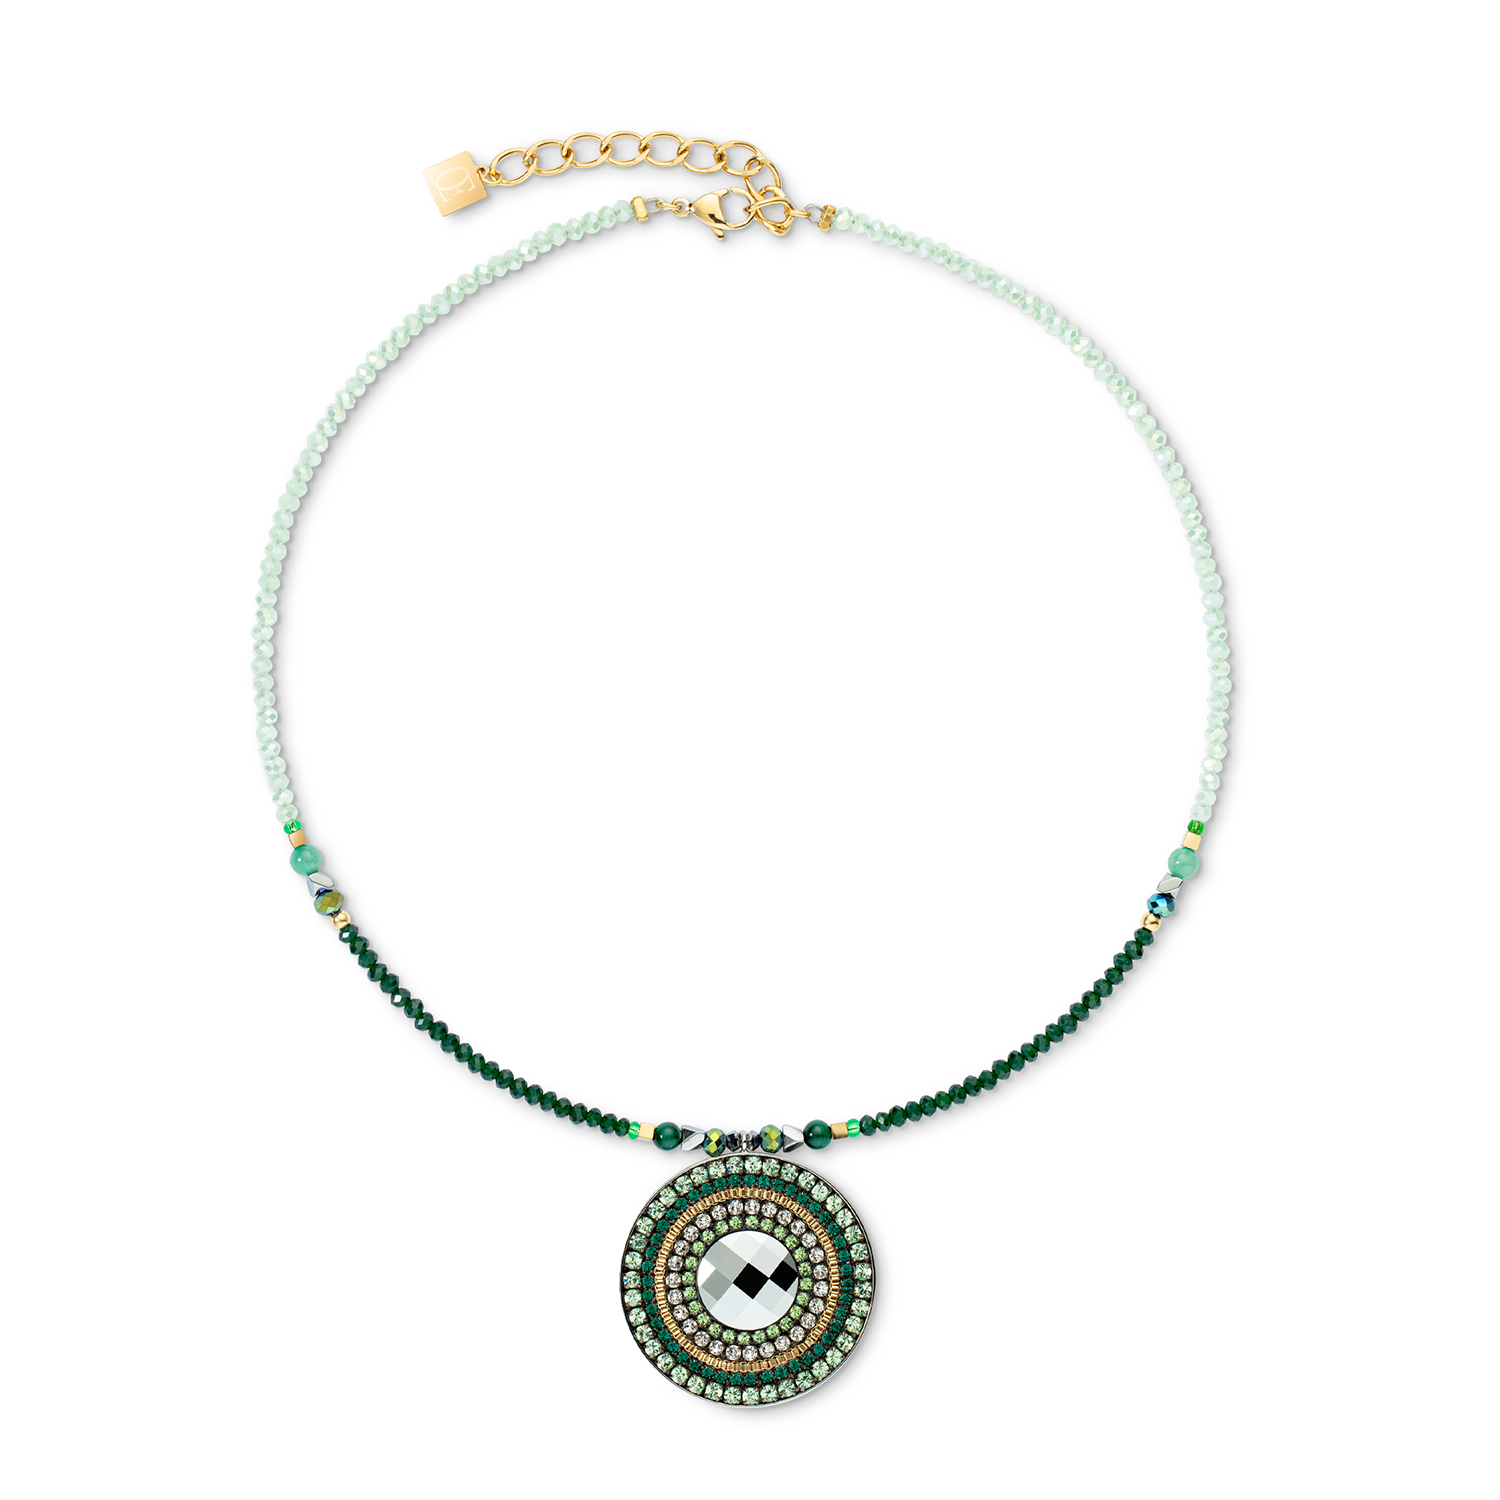 COEUR DE LION Lush Green Malachite Necklace with European Crystal Disk